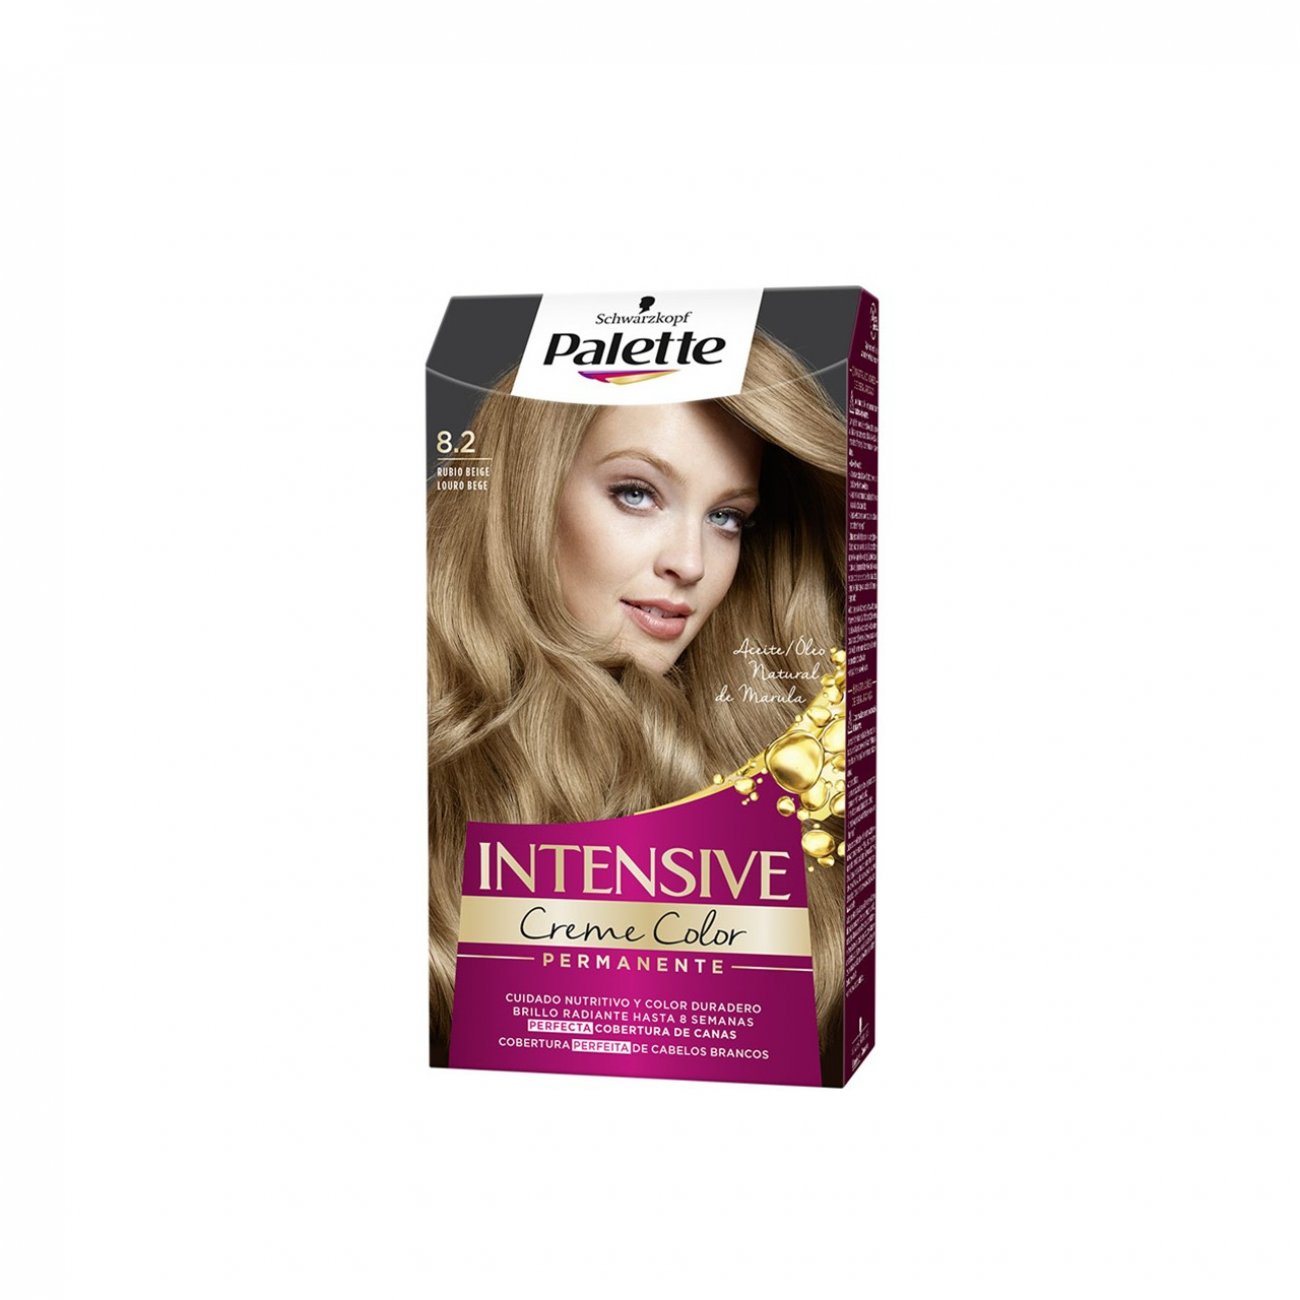 Kopen Schwarzkopf Palette Intensive Creme Color Permanent Hair Dye Beige Blonde · Nederland